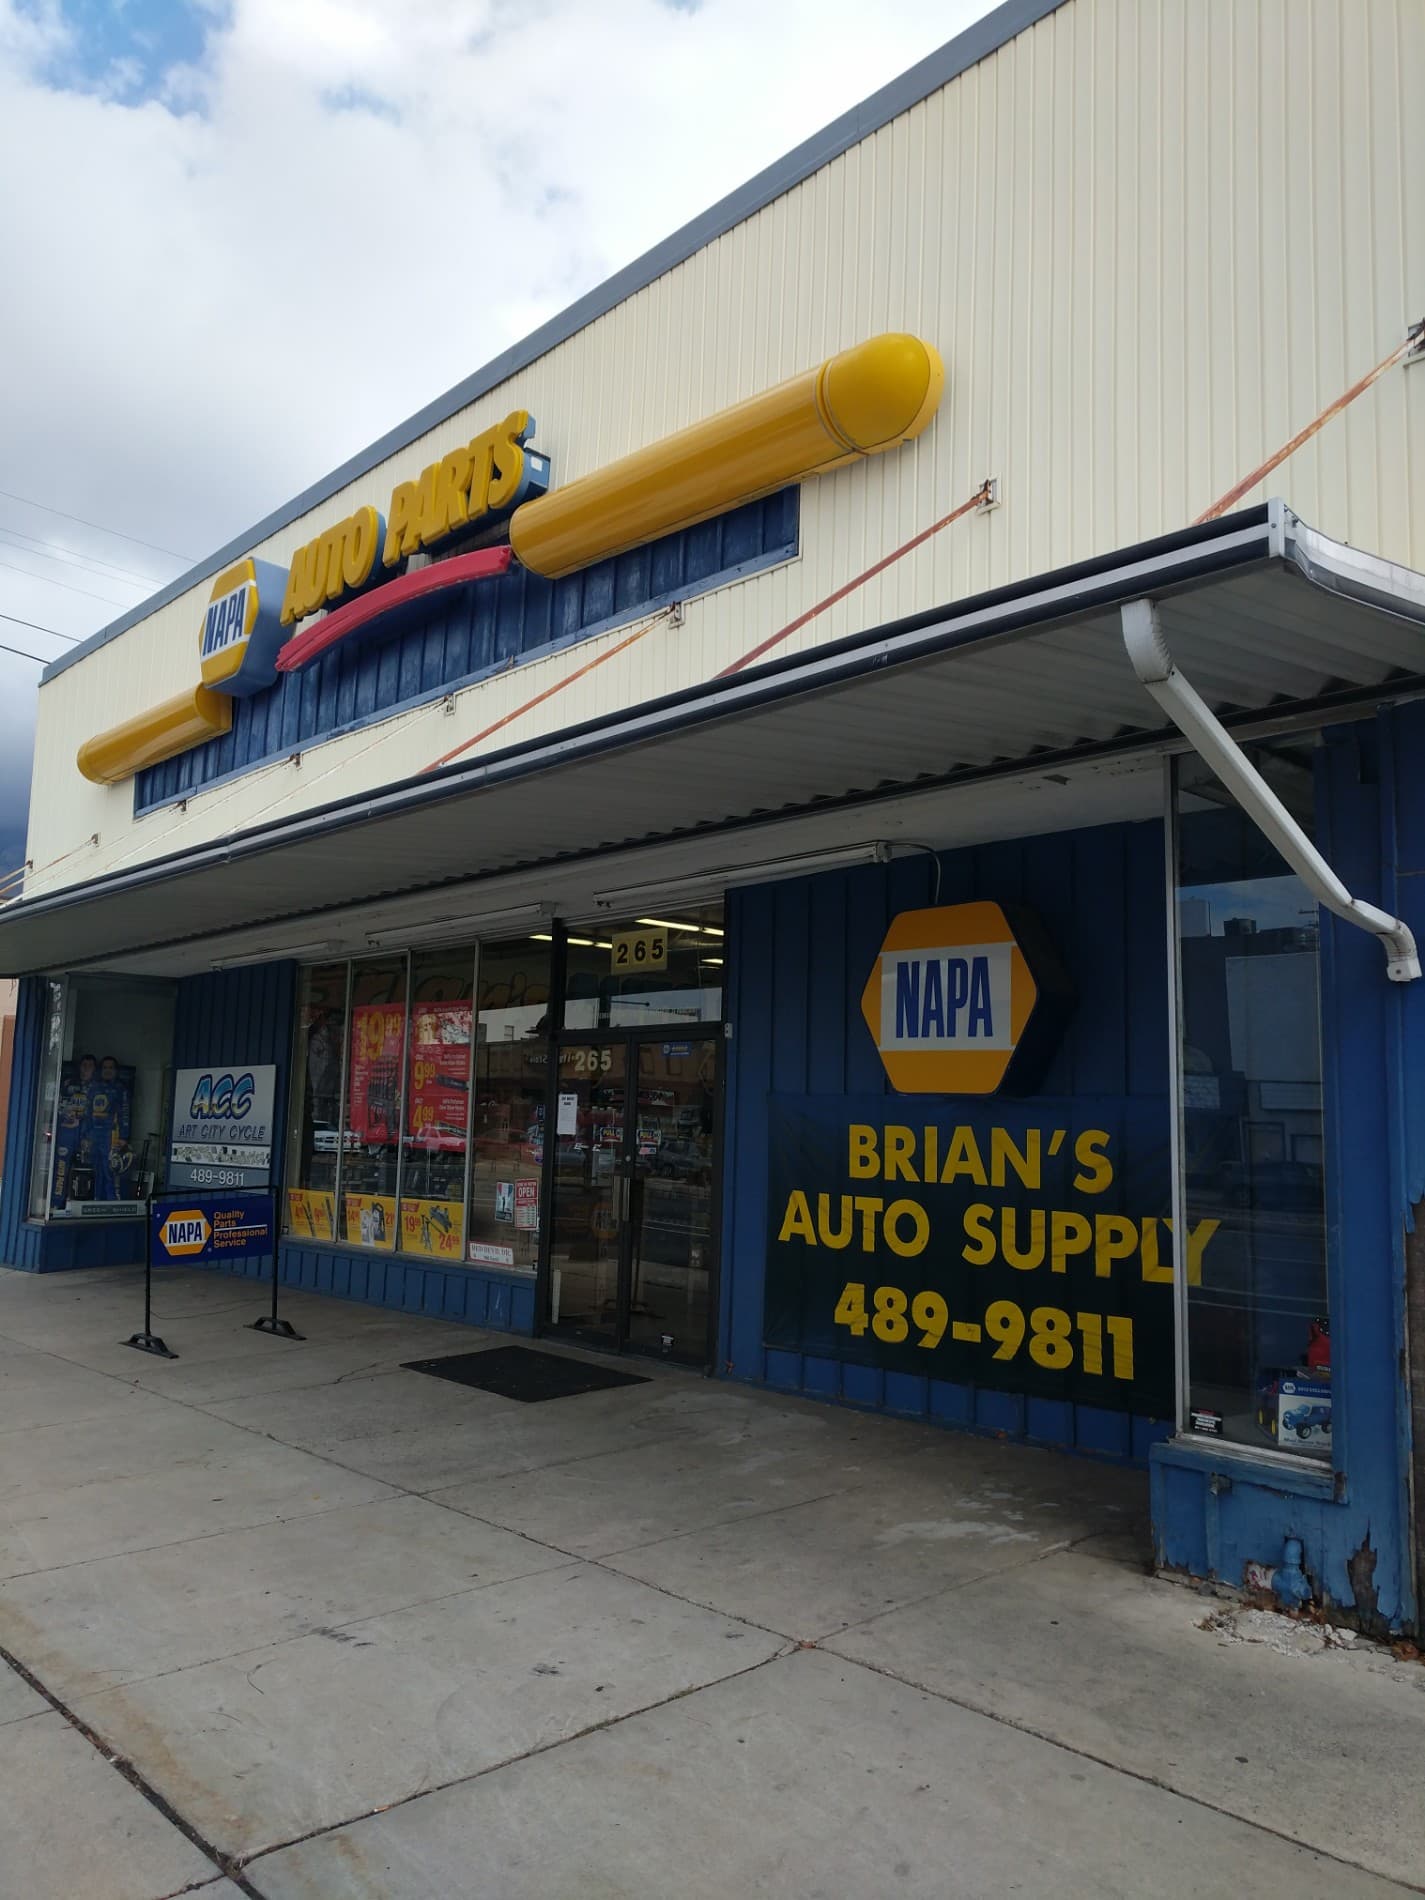 NAPA Auto Parts - Brians Auto Supply - Springville, UT, US, auto parts shop near me